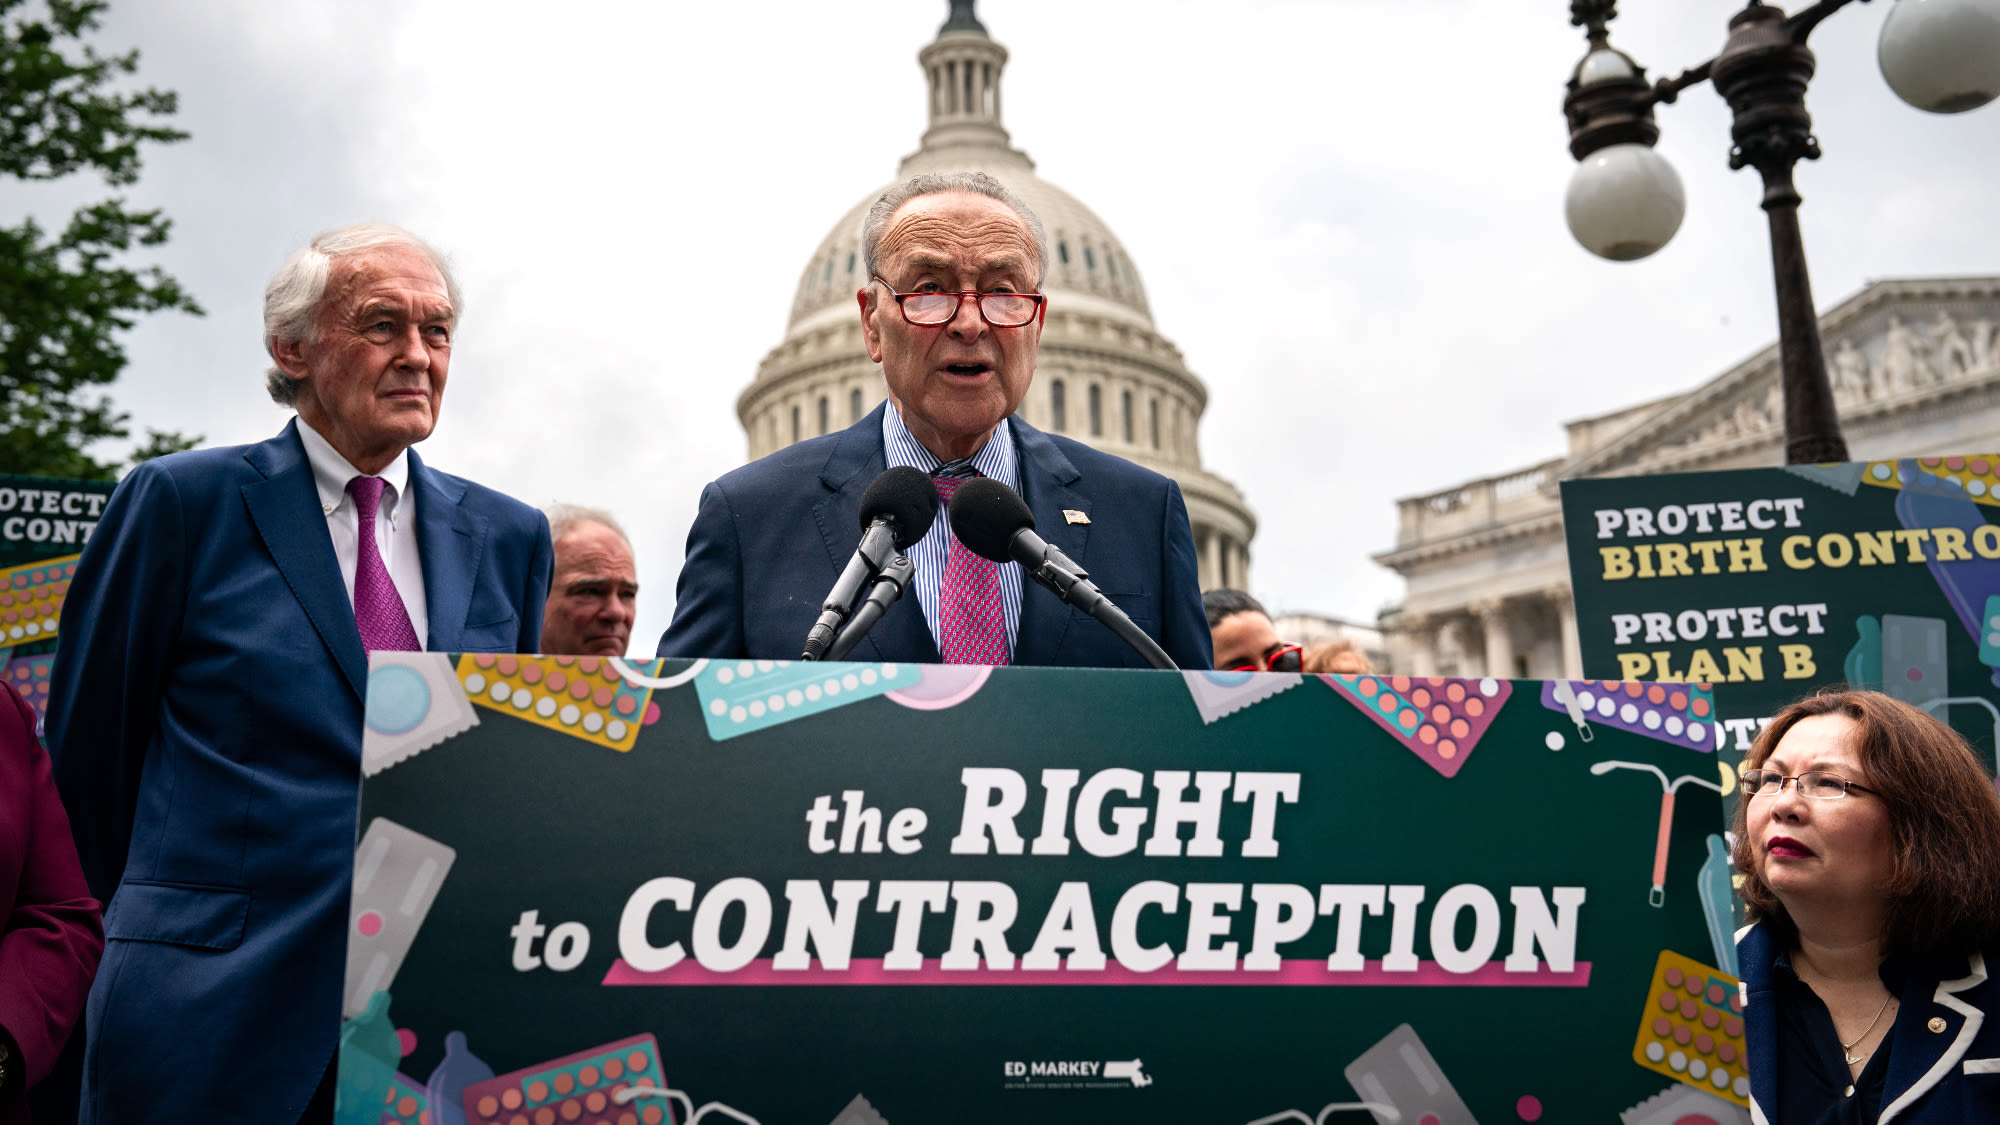 Senate GOP blocks birth control access bill